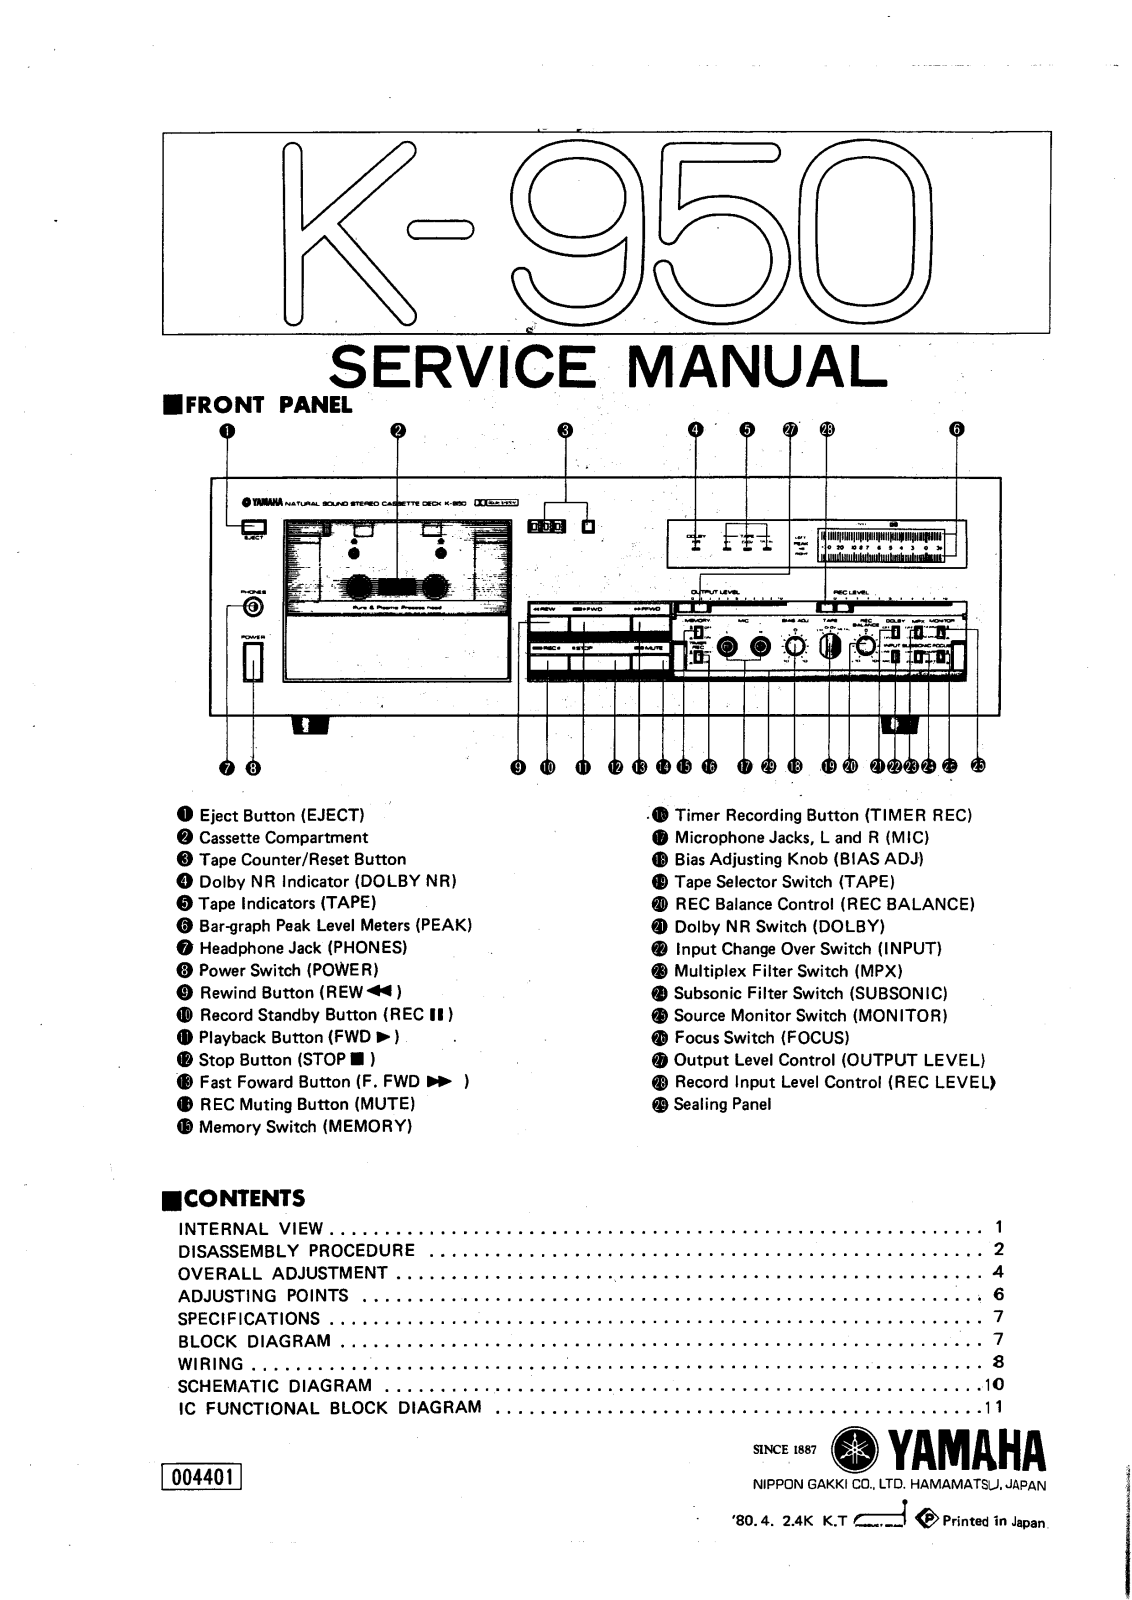 Yamaha K-950 Service Manual